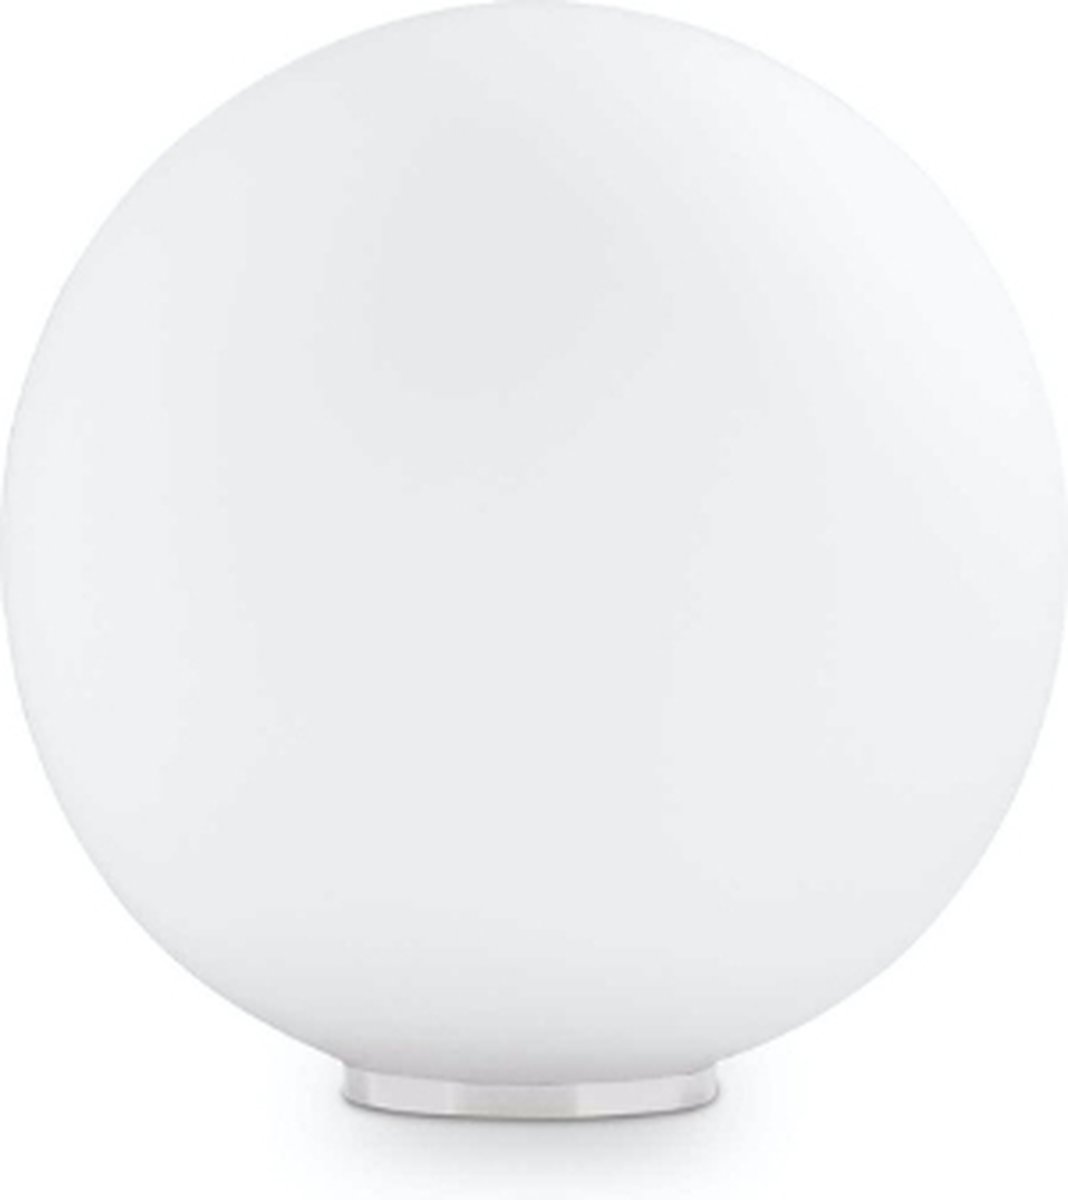 Ideal Lux - Mapa bianco - Tafellamp - Metaal - E27 - Wit - Voor binnen - Lampen - Woonkamer - Eetkamer - Keuken